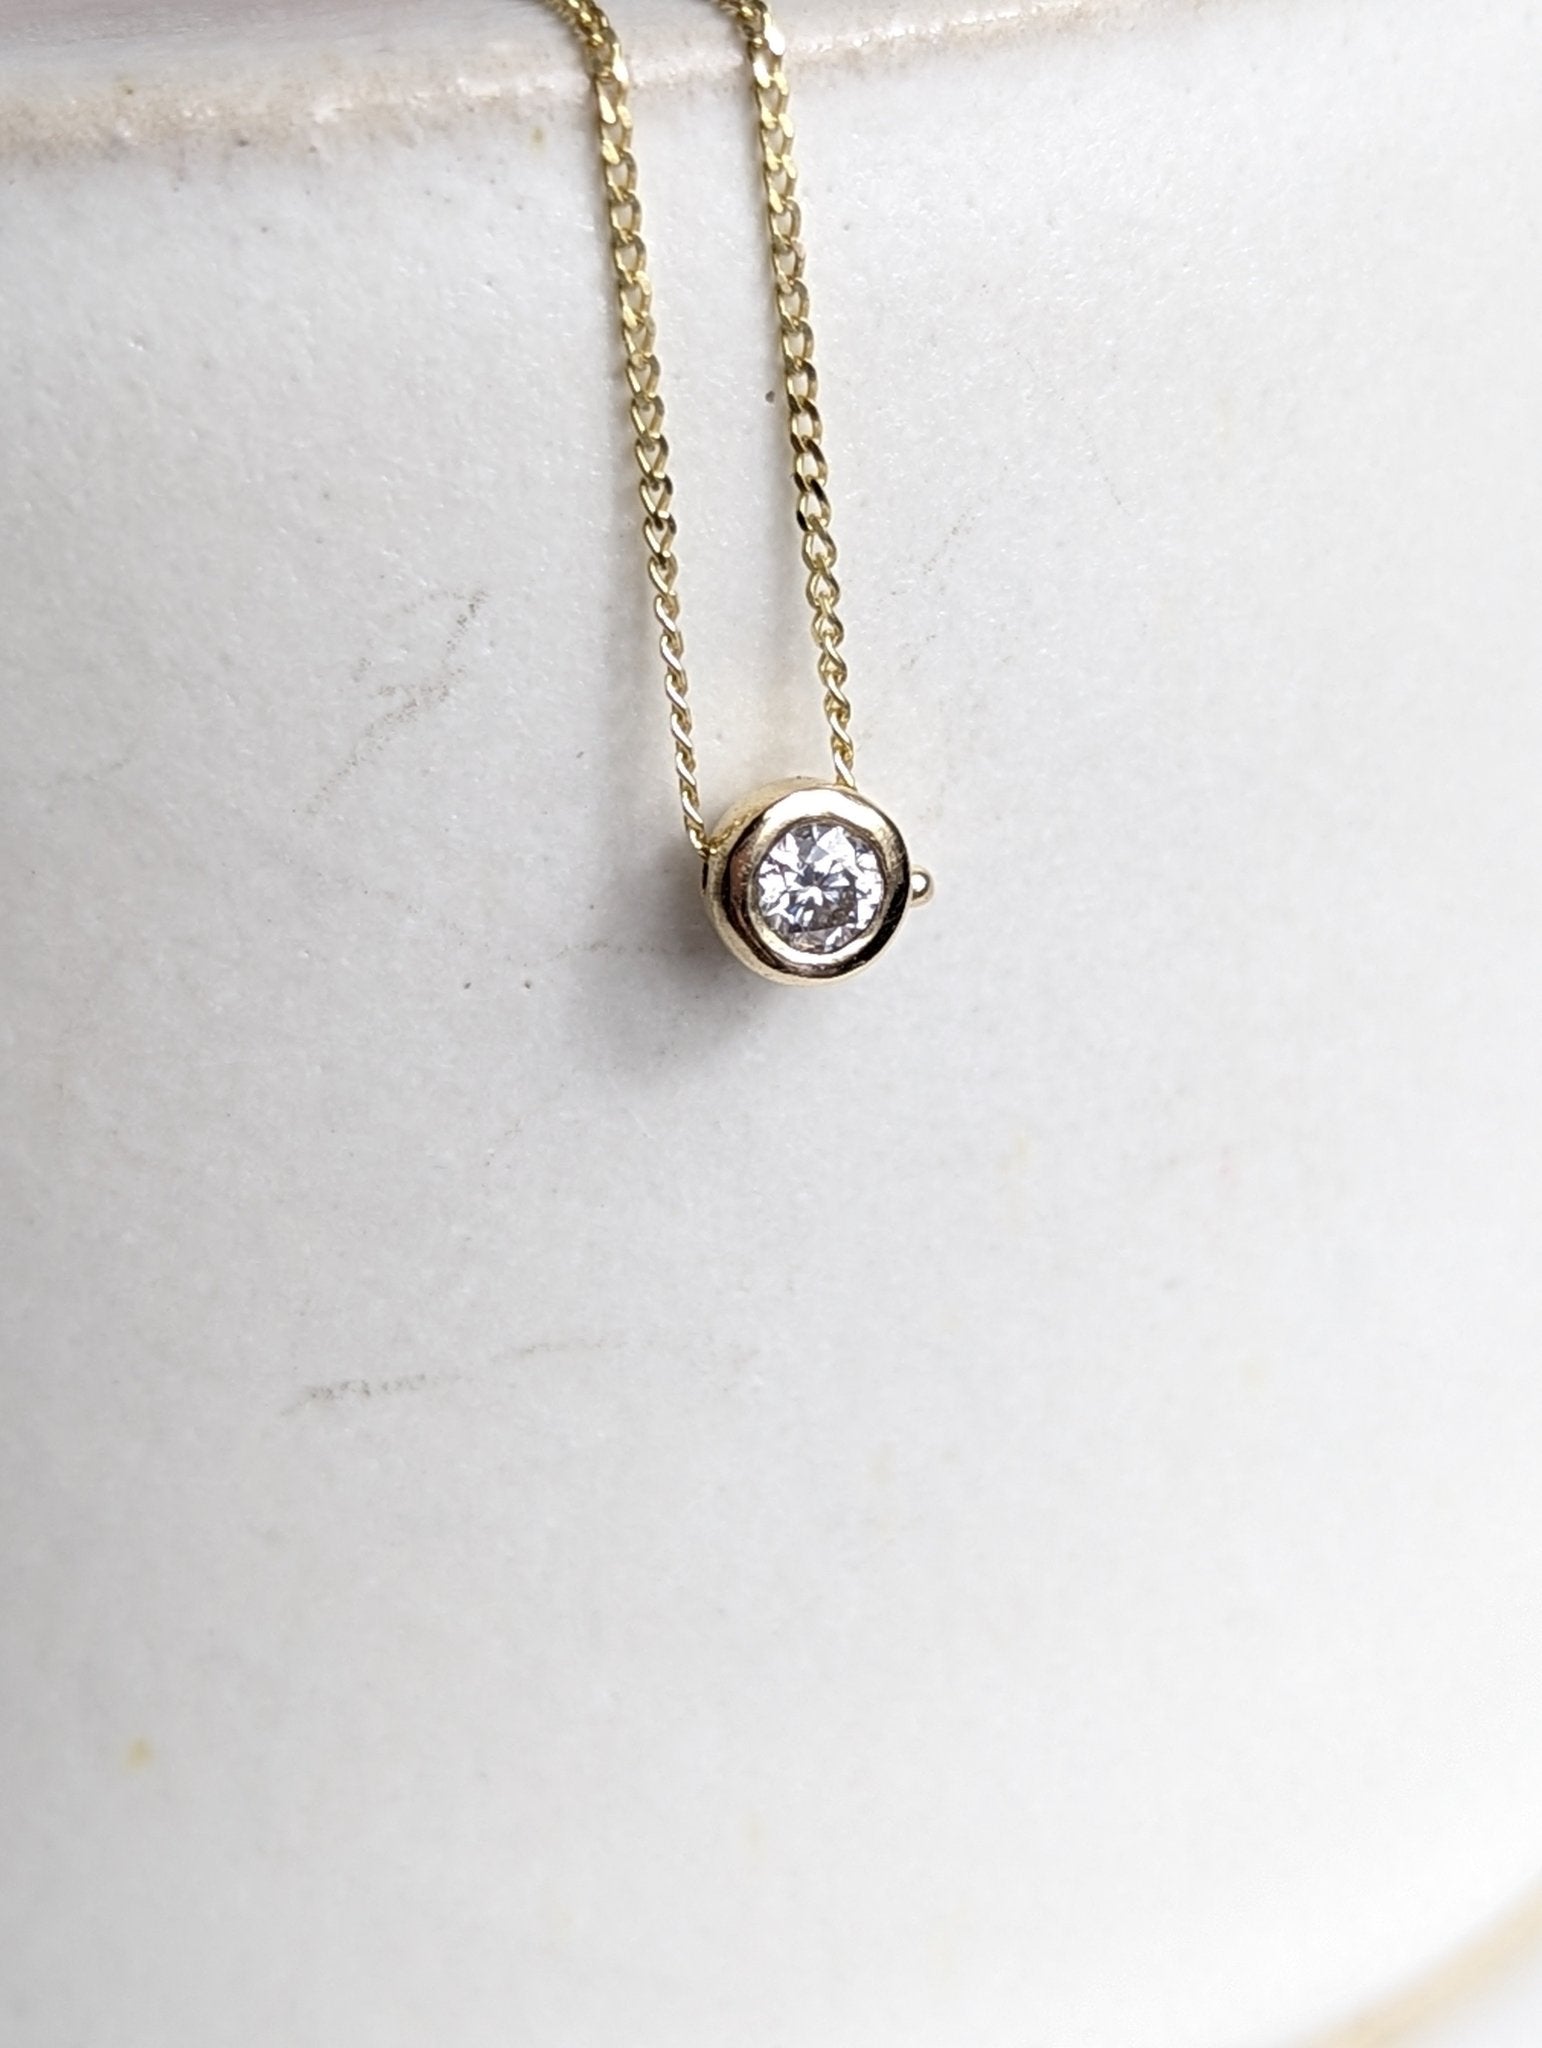 Minimalist gold DEI necklace with sparkly moissanite - Booblinka Jewellery